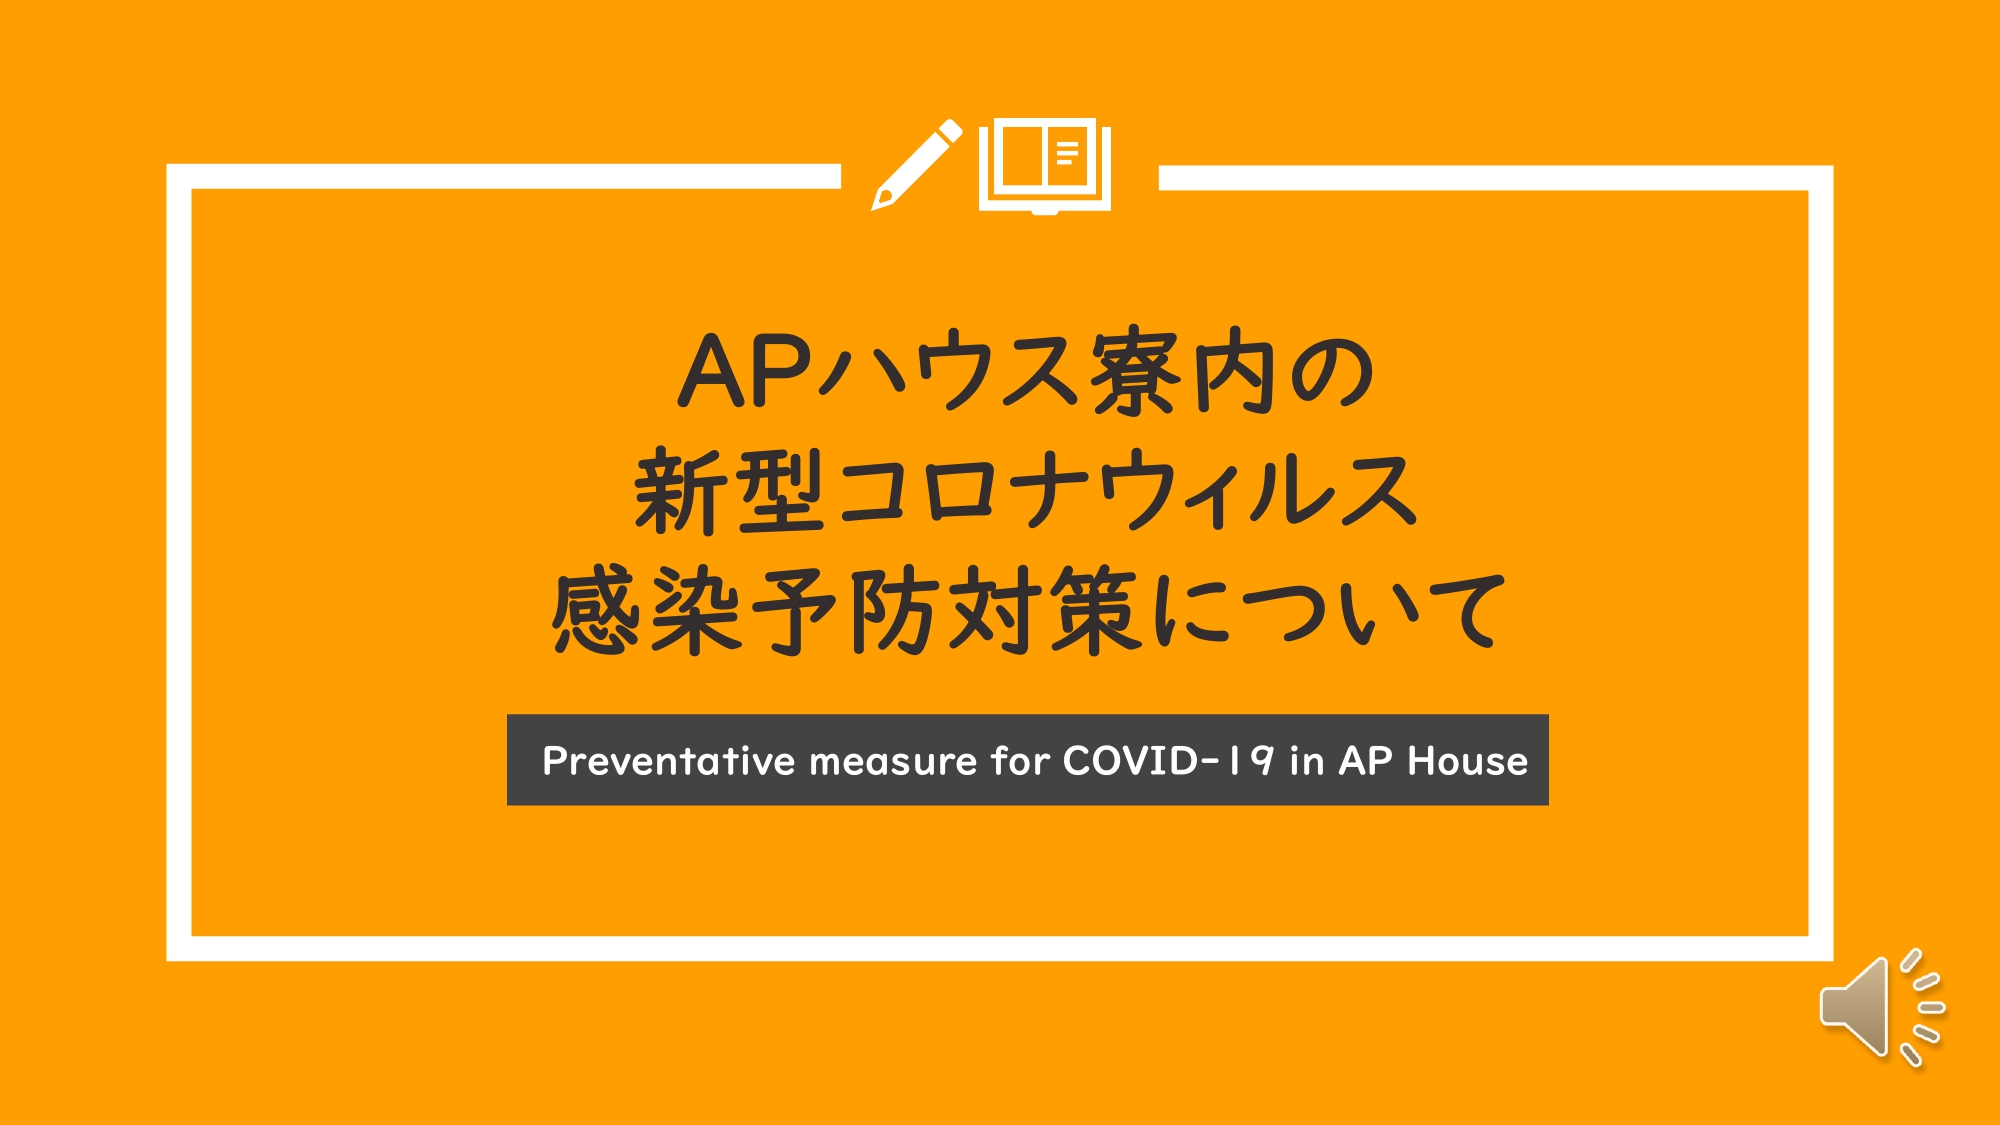 Preventative measure for COVID-19 in AP House